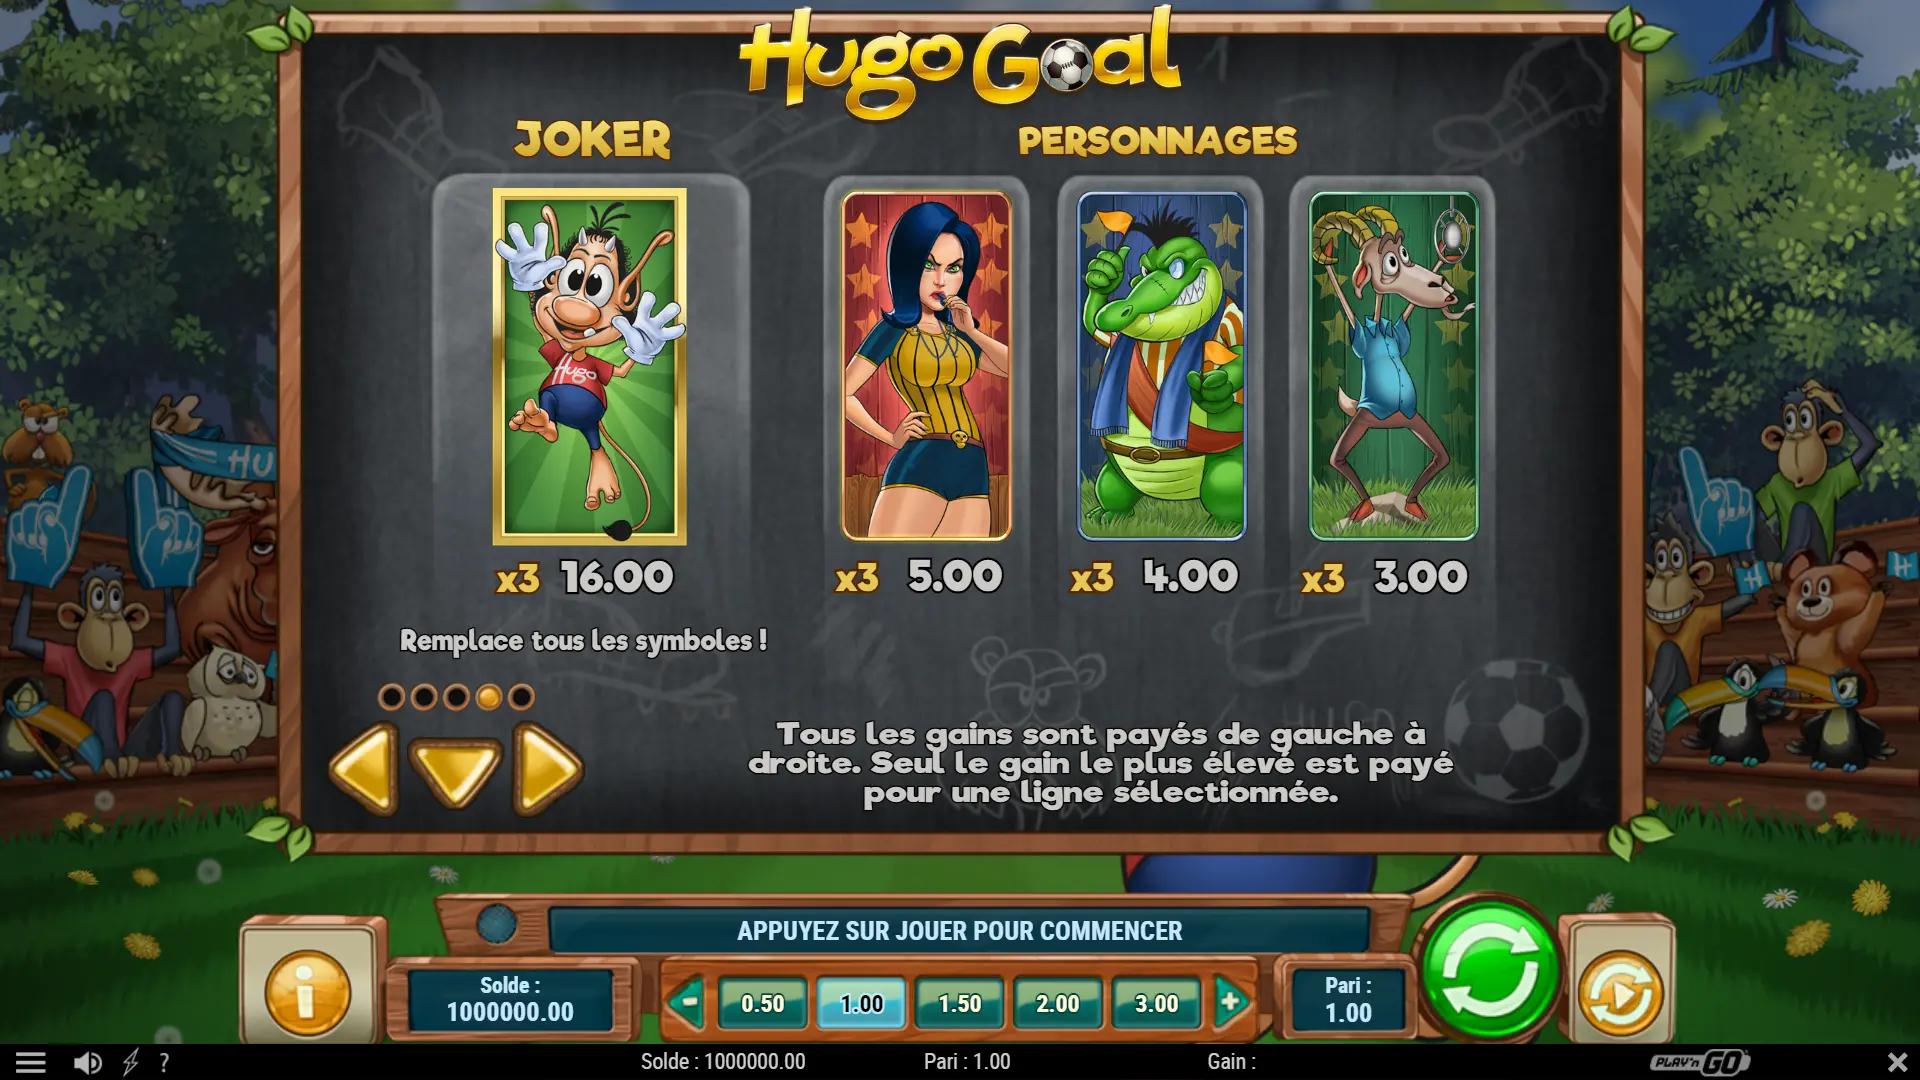 The high value symbols in Hugo Goal